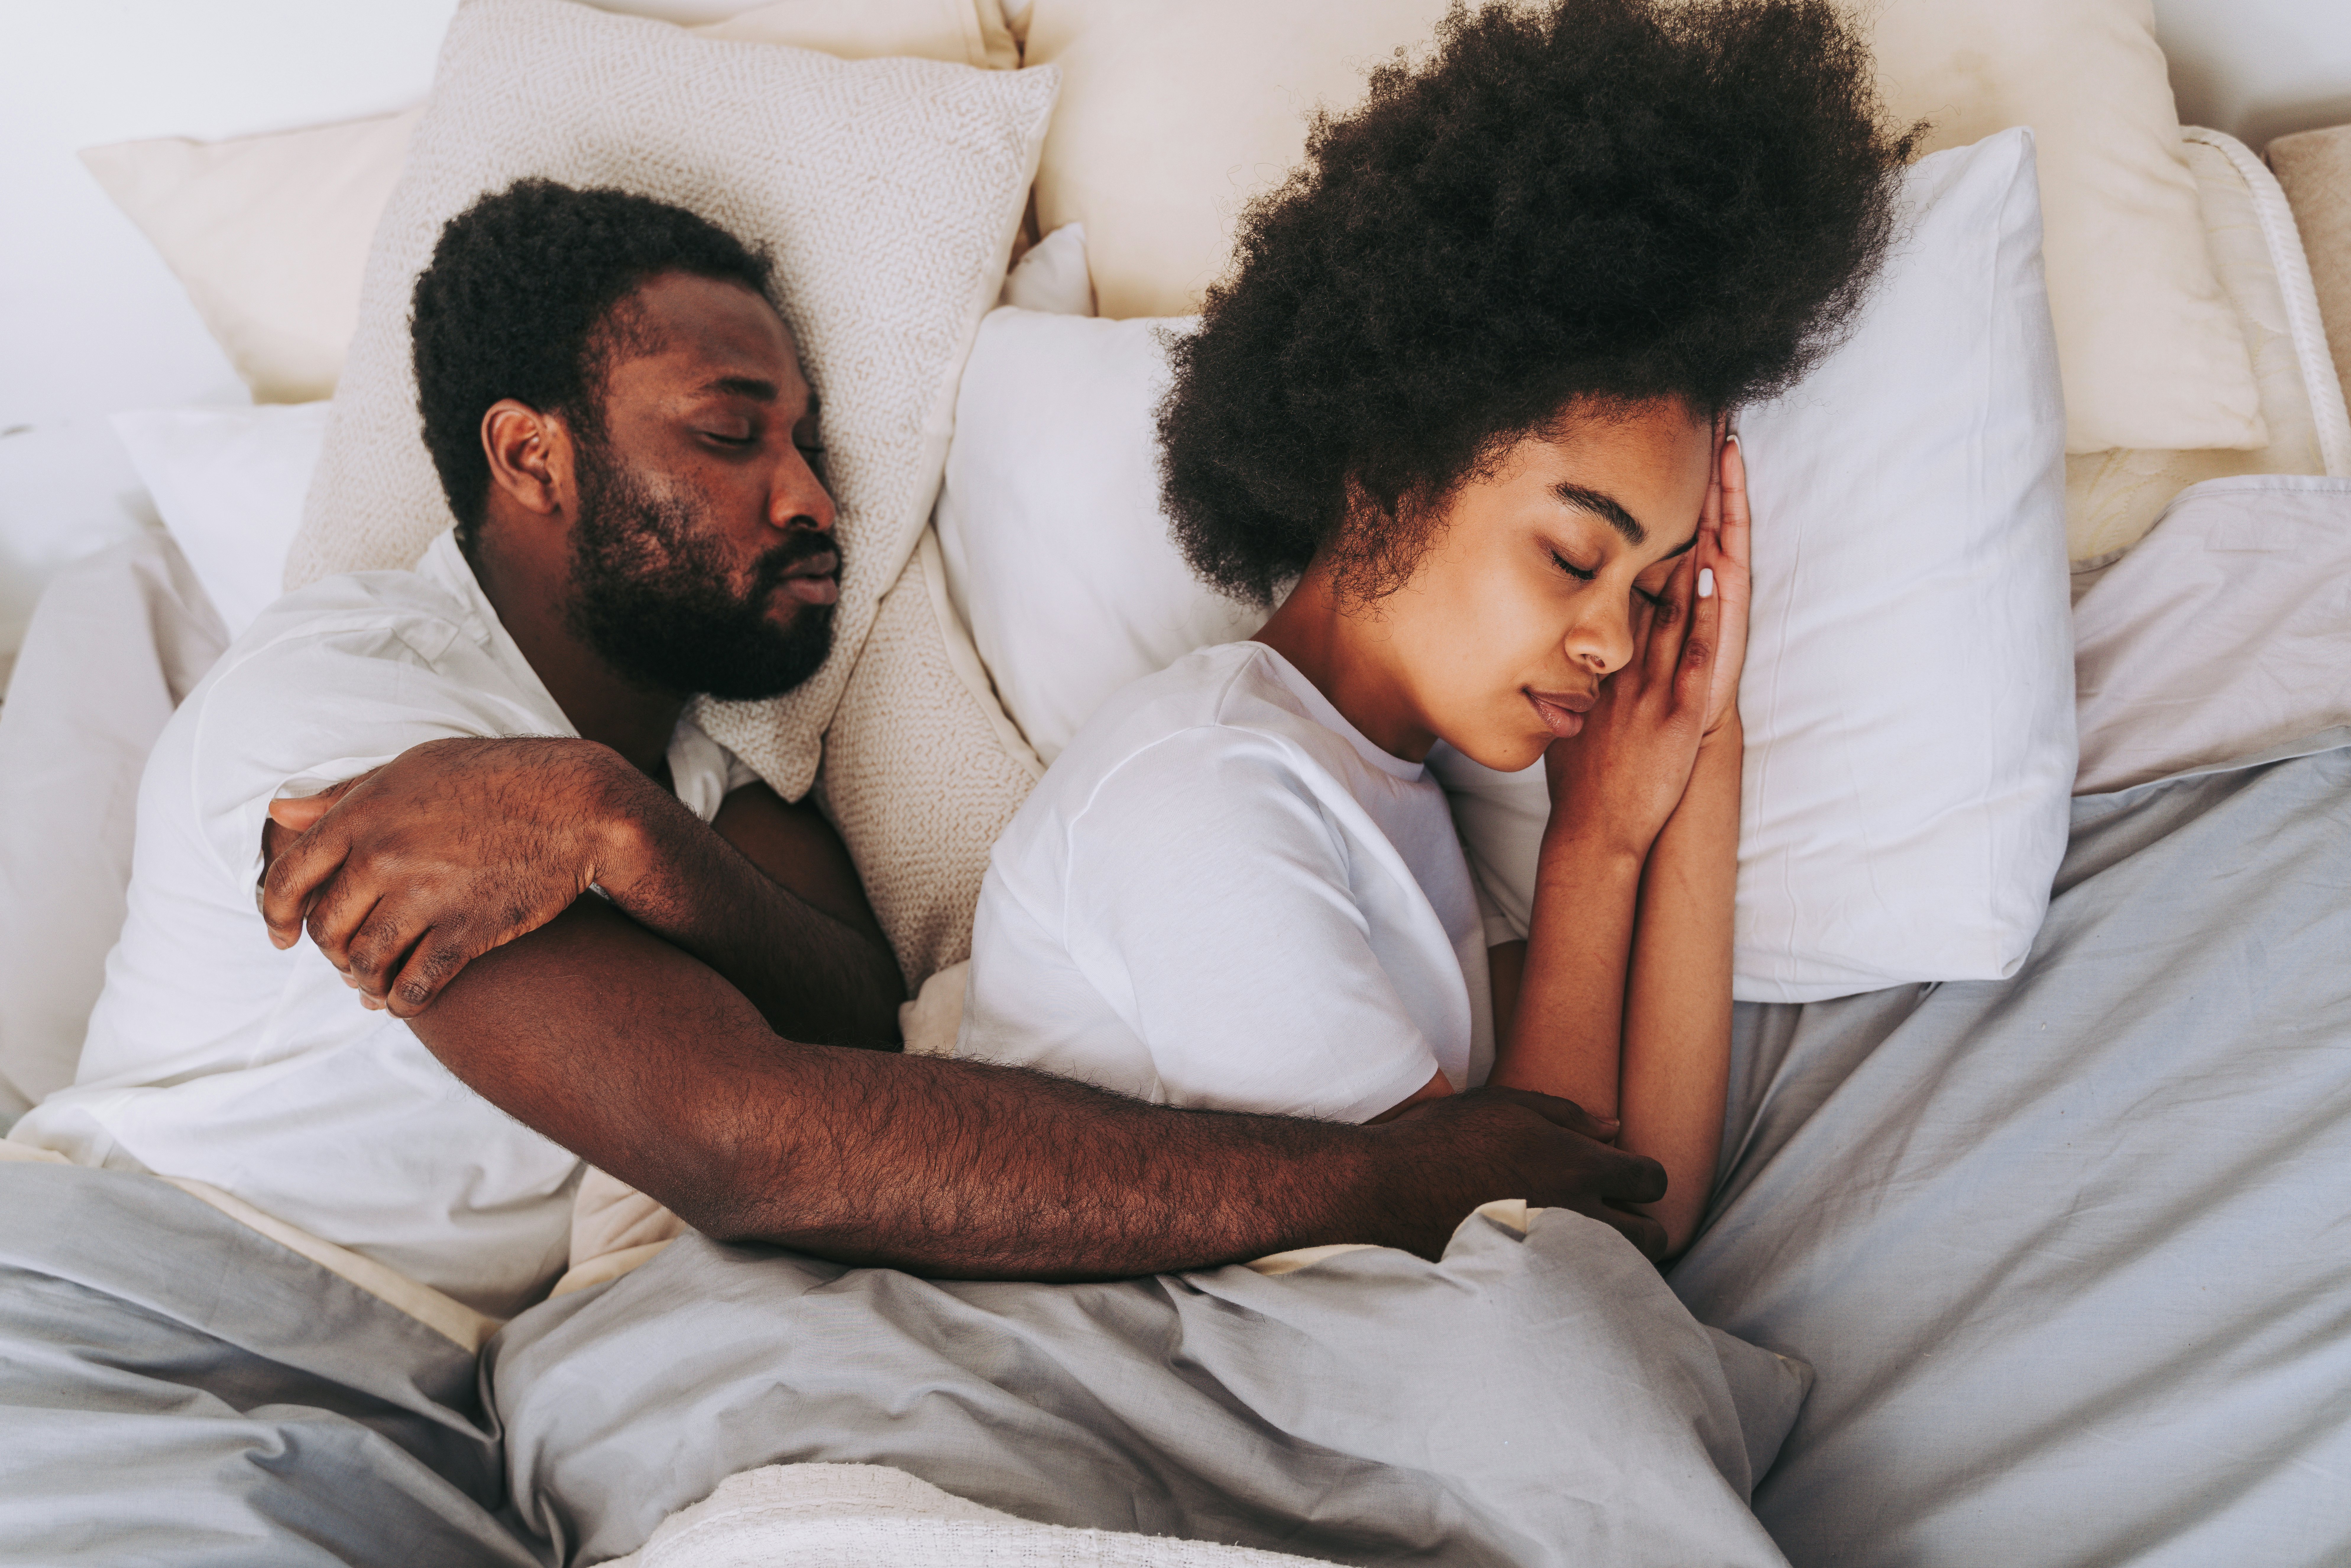 Sex Dream With Boyfriend — What It Means, Per A Dream Analyst